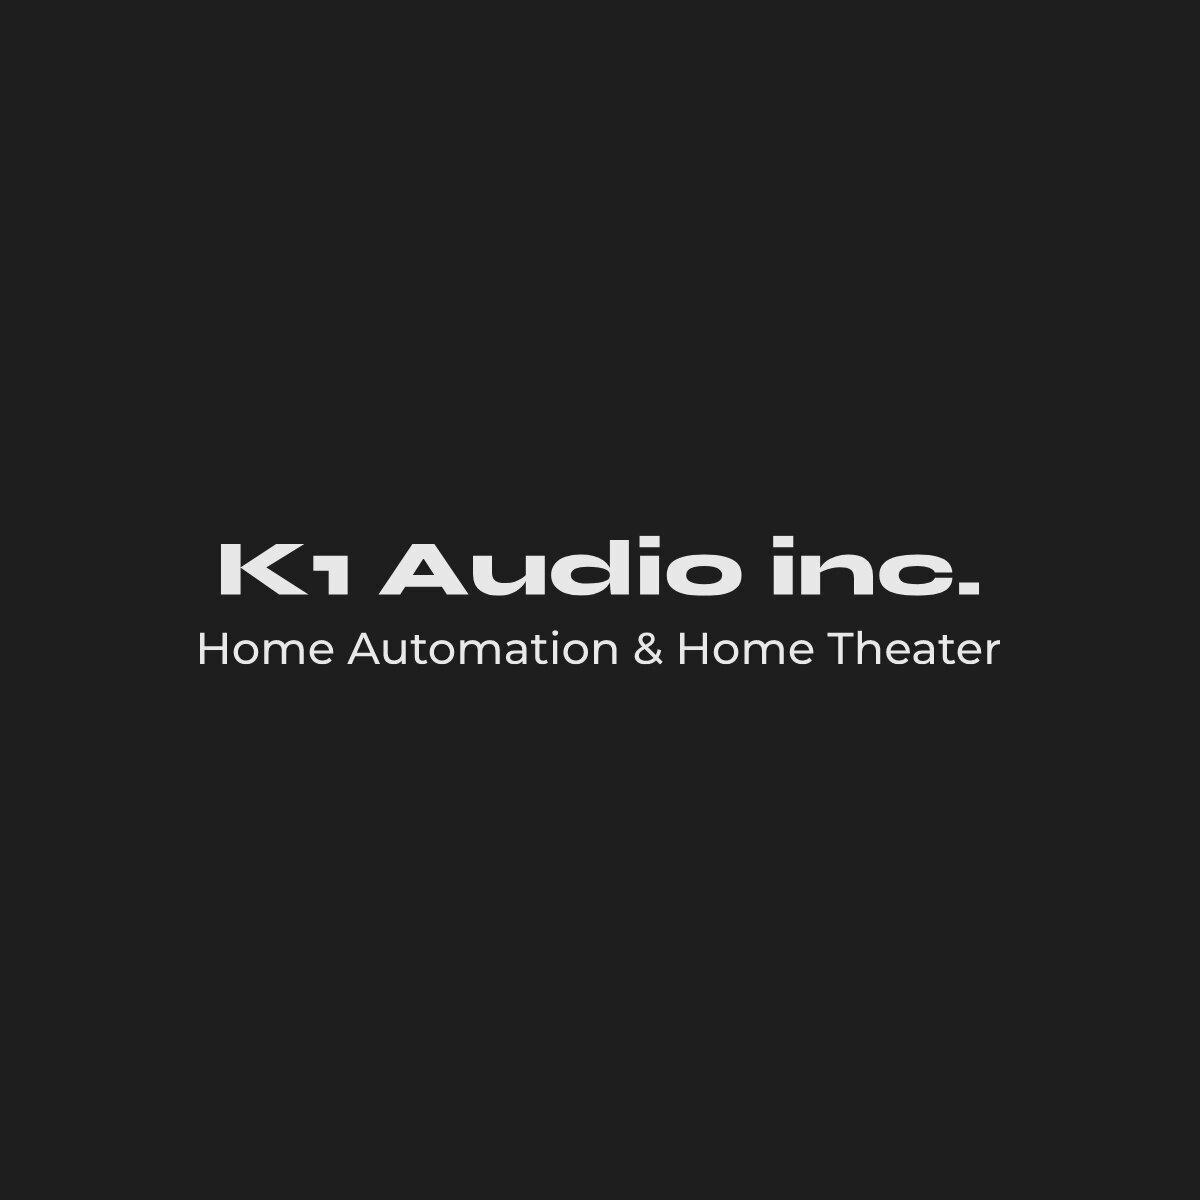 Images K1 audio inc.